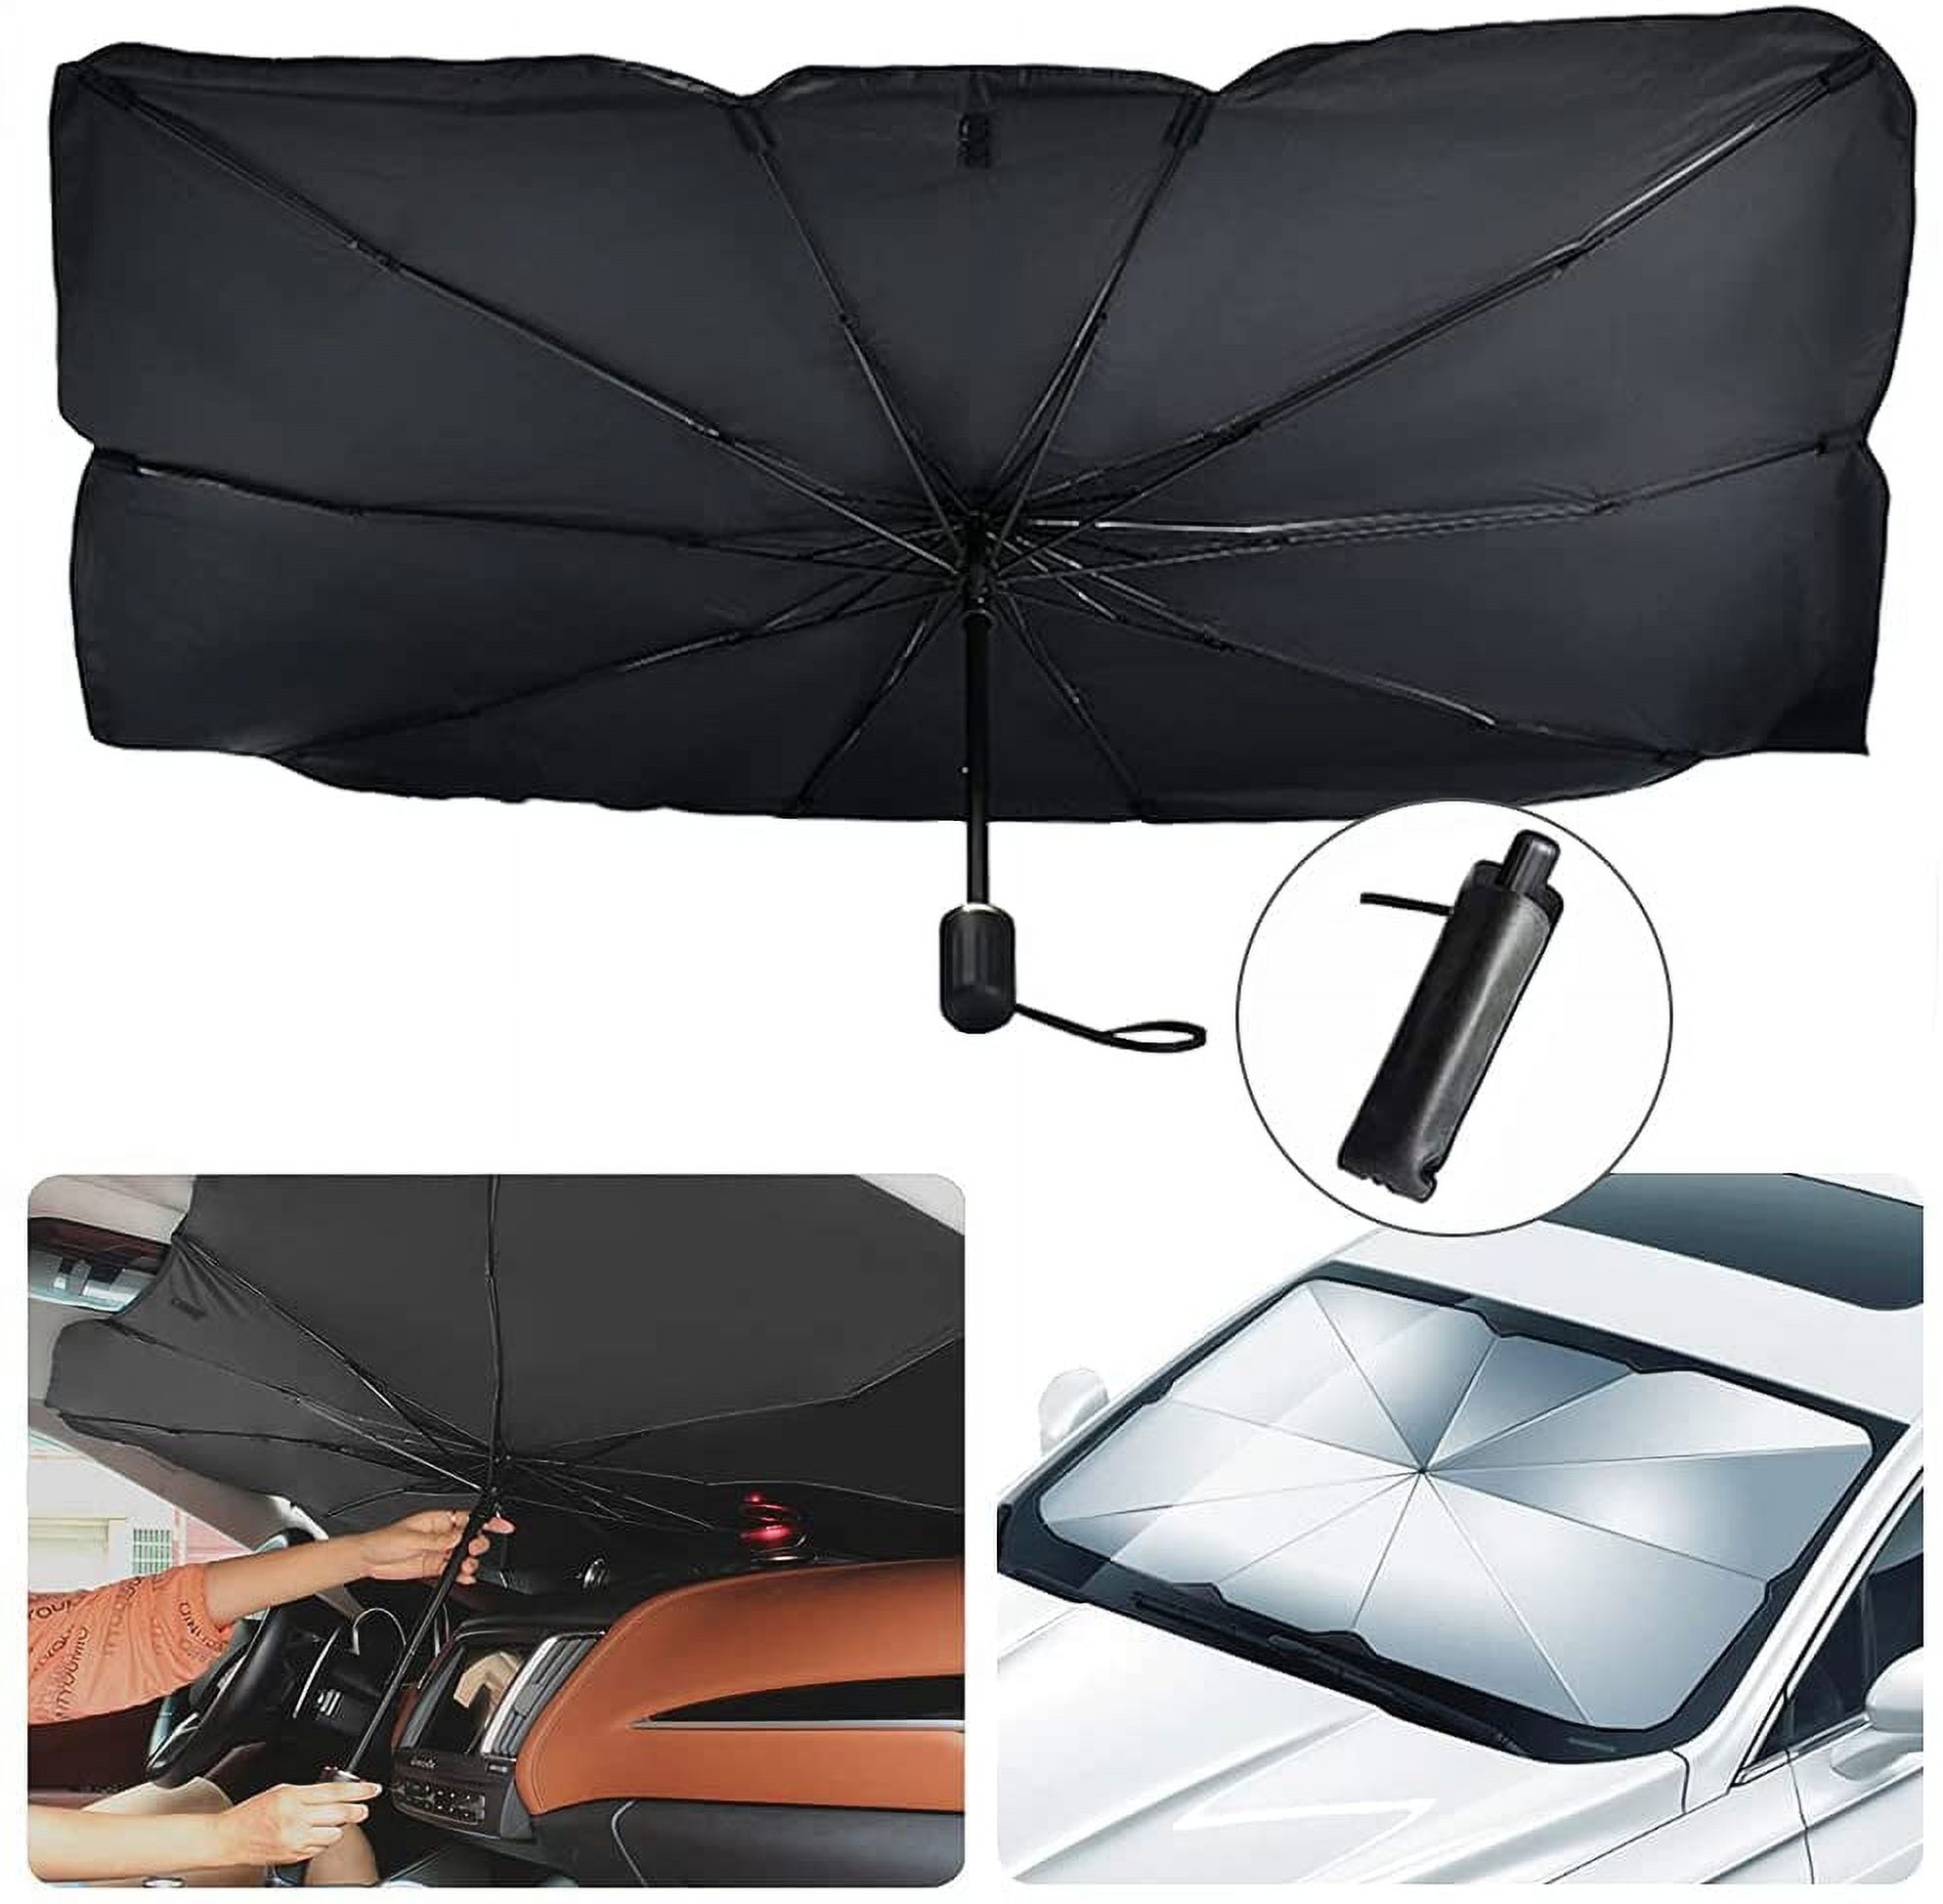 Car Windshield Sun Shade Umbrella - Foldable Car Umbrella Sunshade Cover UV  Block Car Front Window 